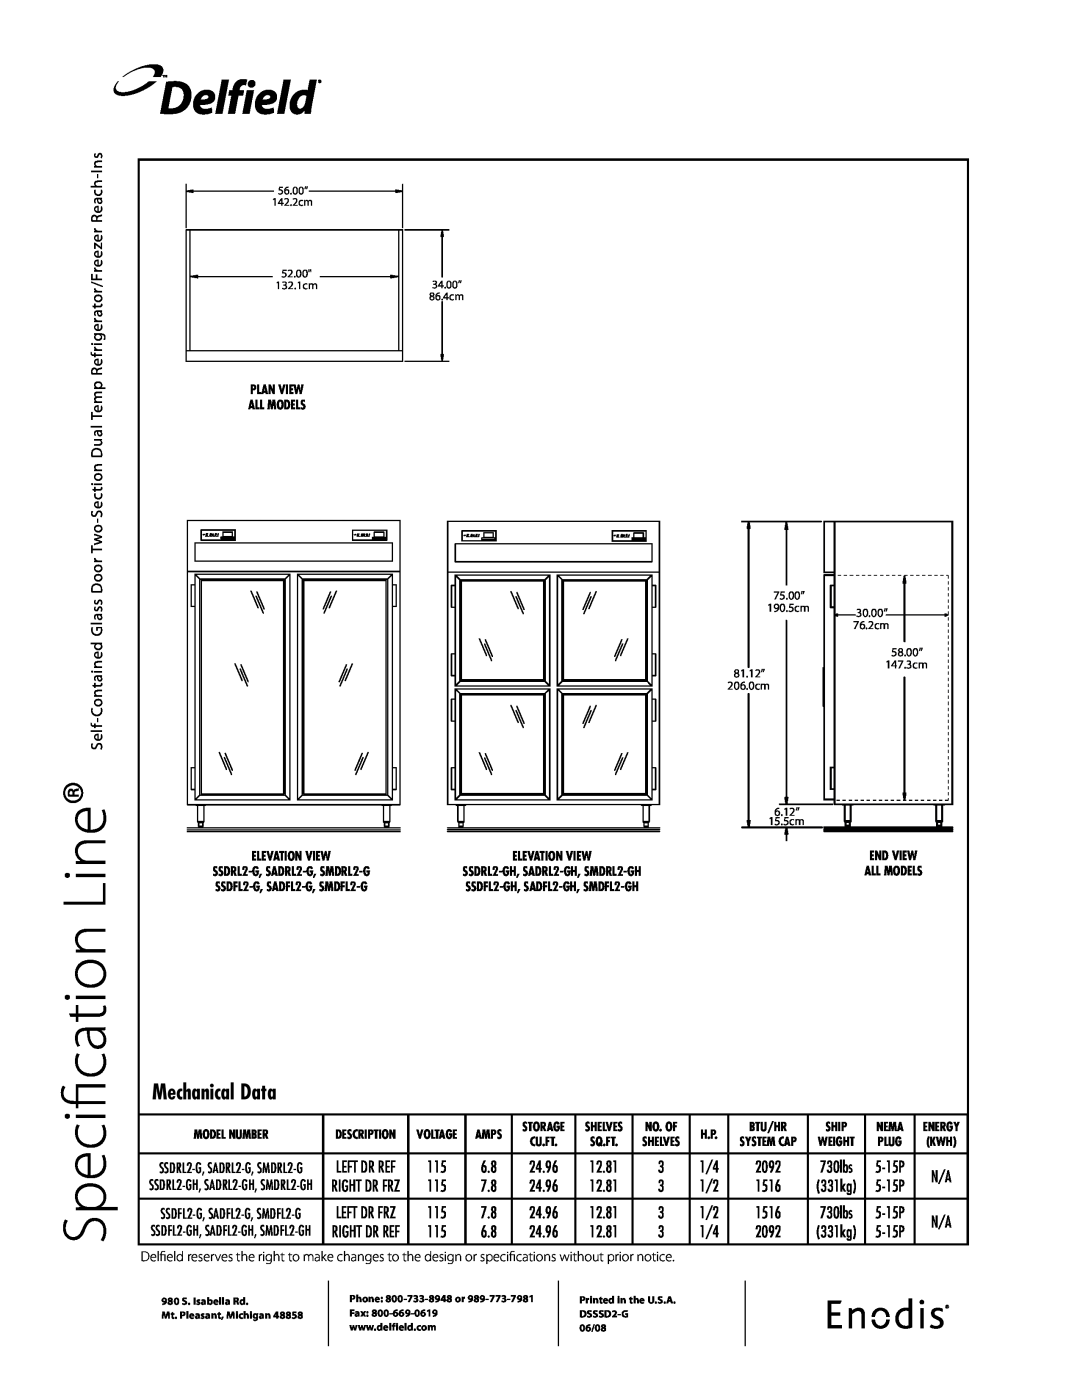 Delfield SSDRL2-G Specification, Delfield, Mechanical Data, Refrigerator/Freezer Reach-Ins, 730lbs, 5-15P, Elevation View 